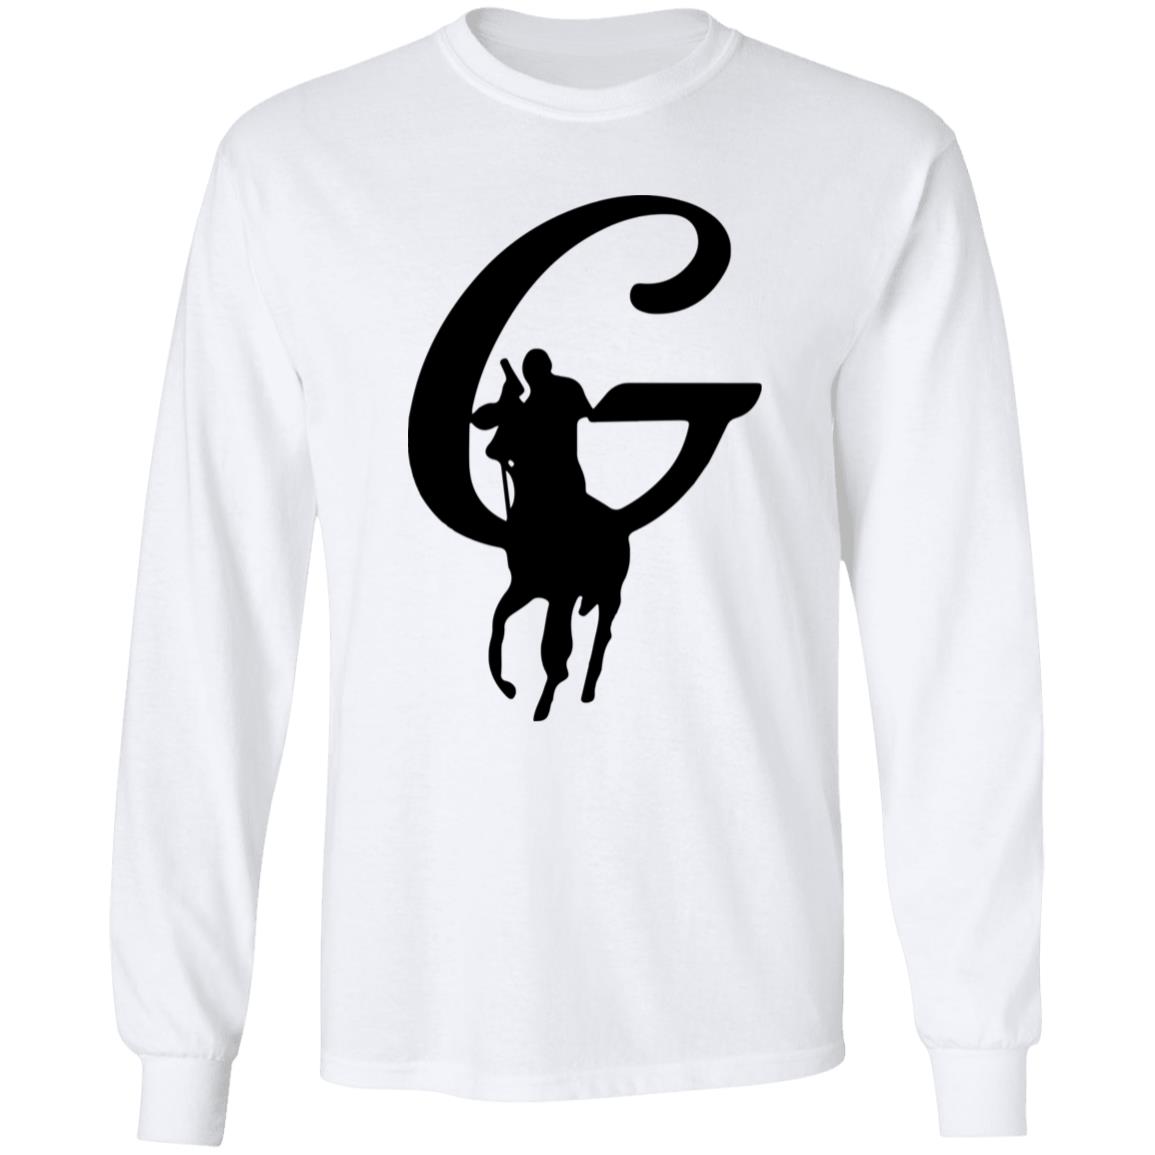 Gildan Polo G merch G Logo T-Shirt Polo G Shirt Rapper Shirt YH-PLG02-SHIRT / Black / XL